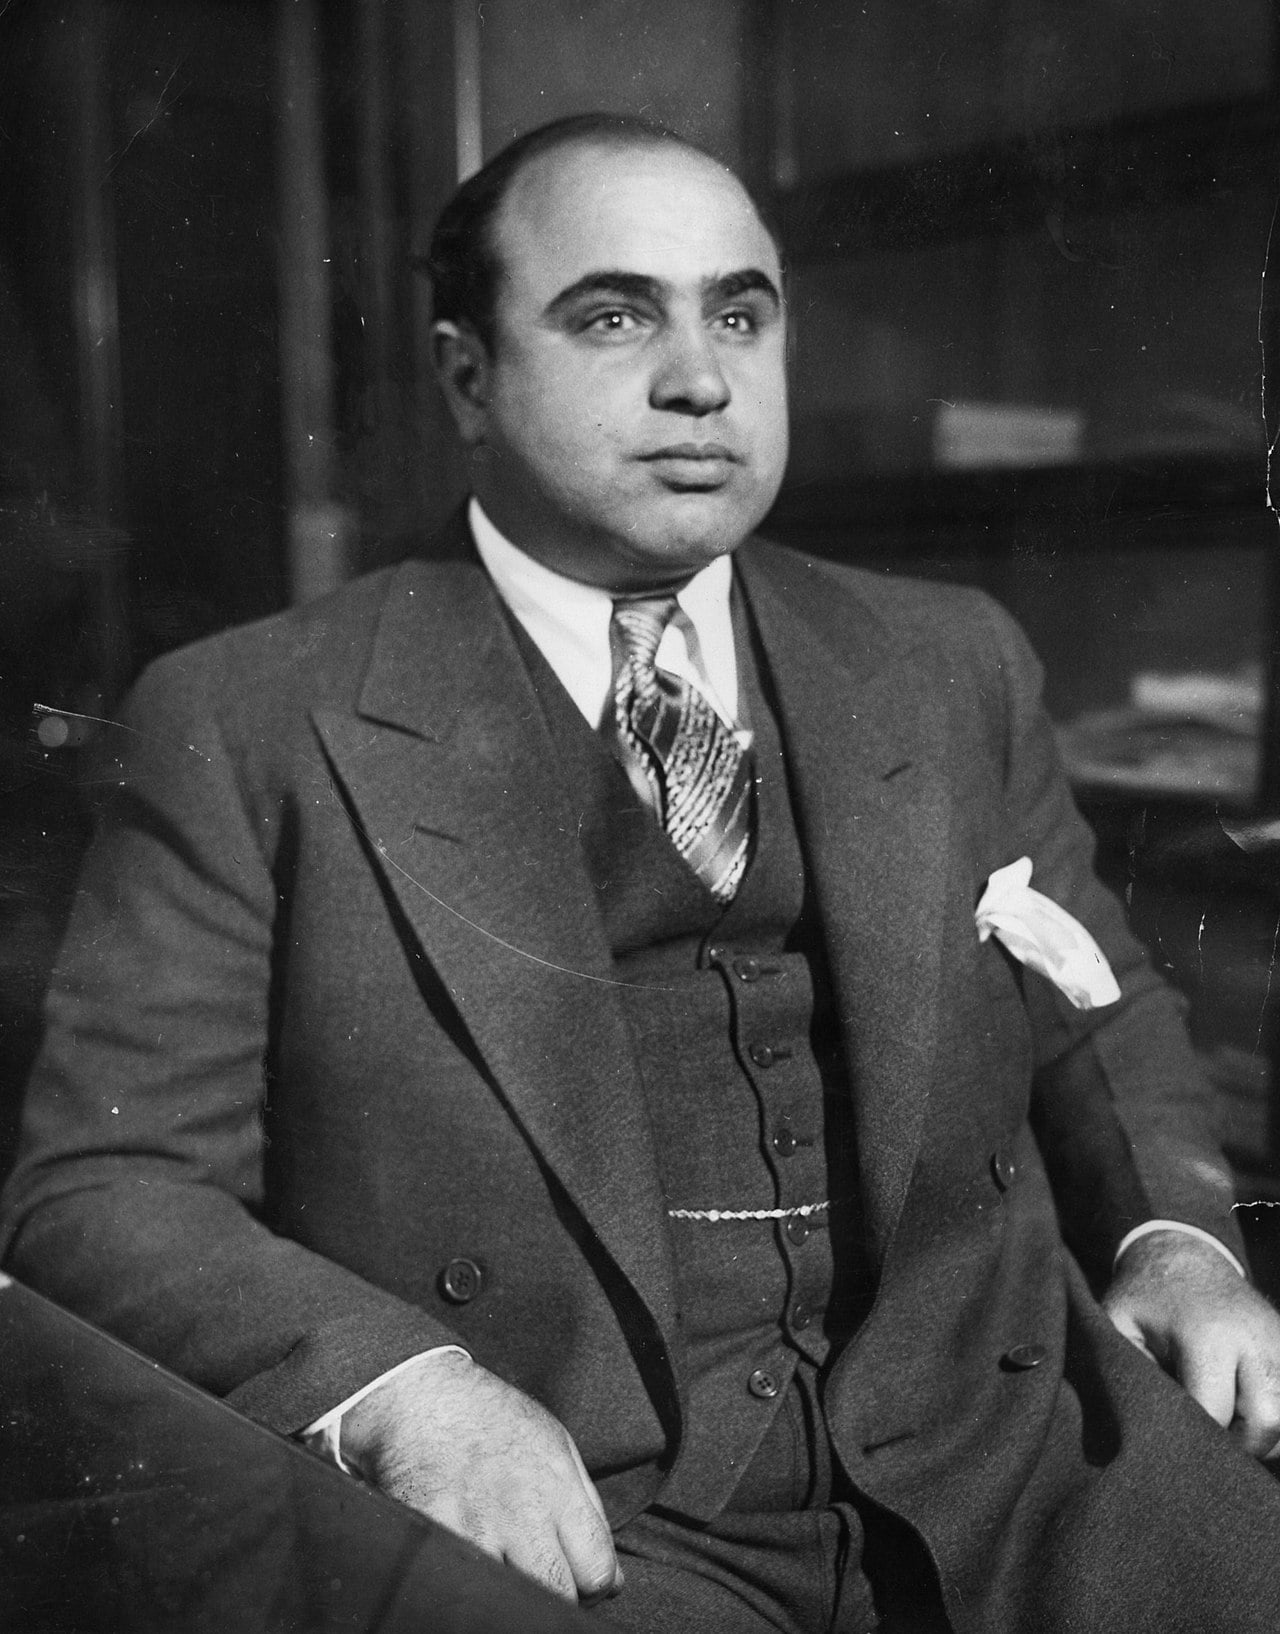 Al Capone 1899 - 1947 (Chicago Bureau/Federal Bureau of Investigation)